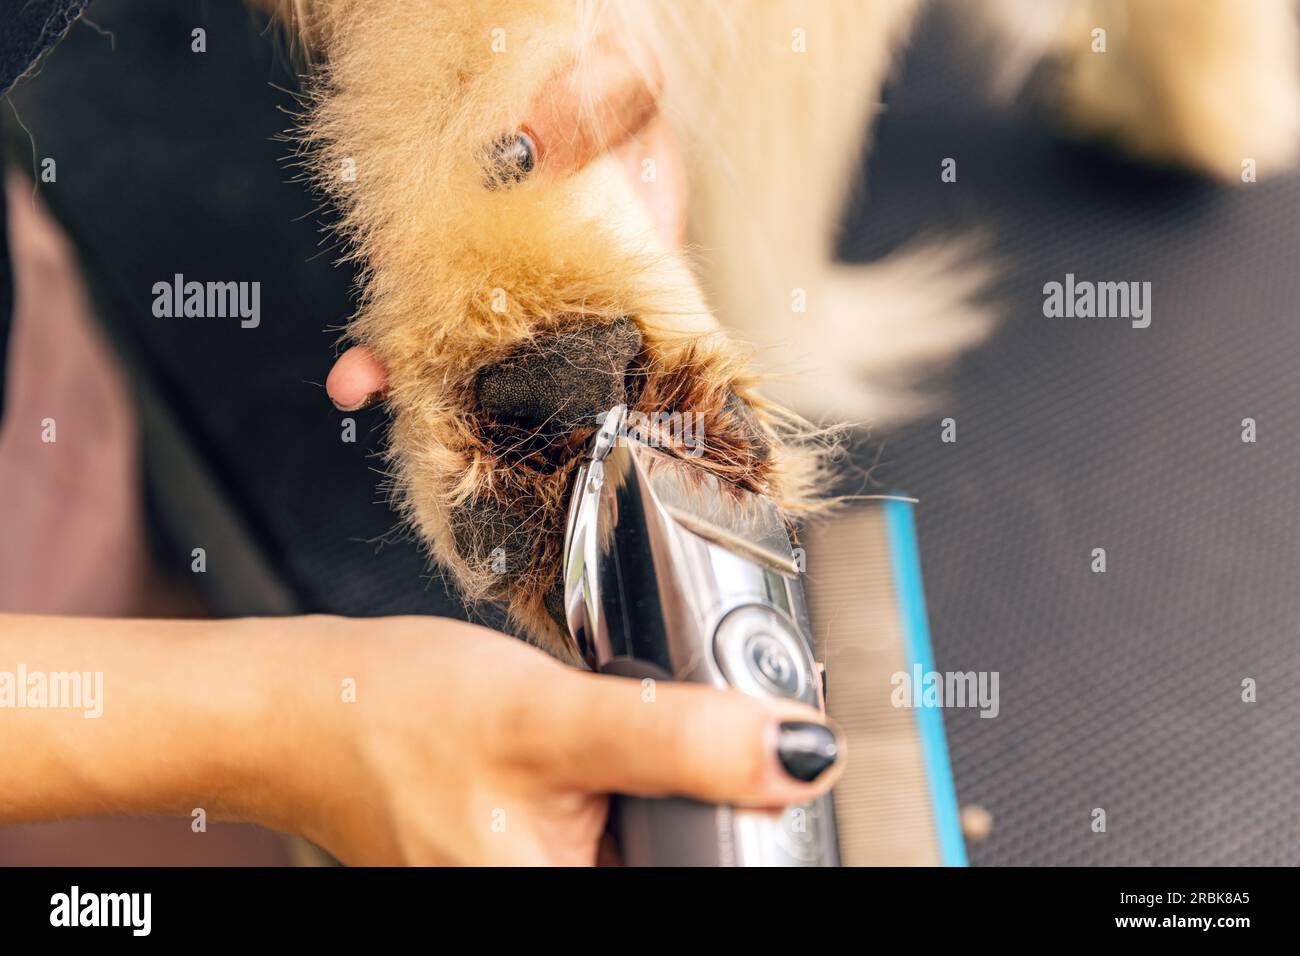 Dog grooming service. Groomer cutting fur of dog paw Stock Photo